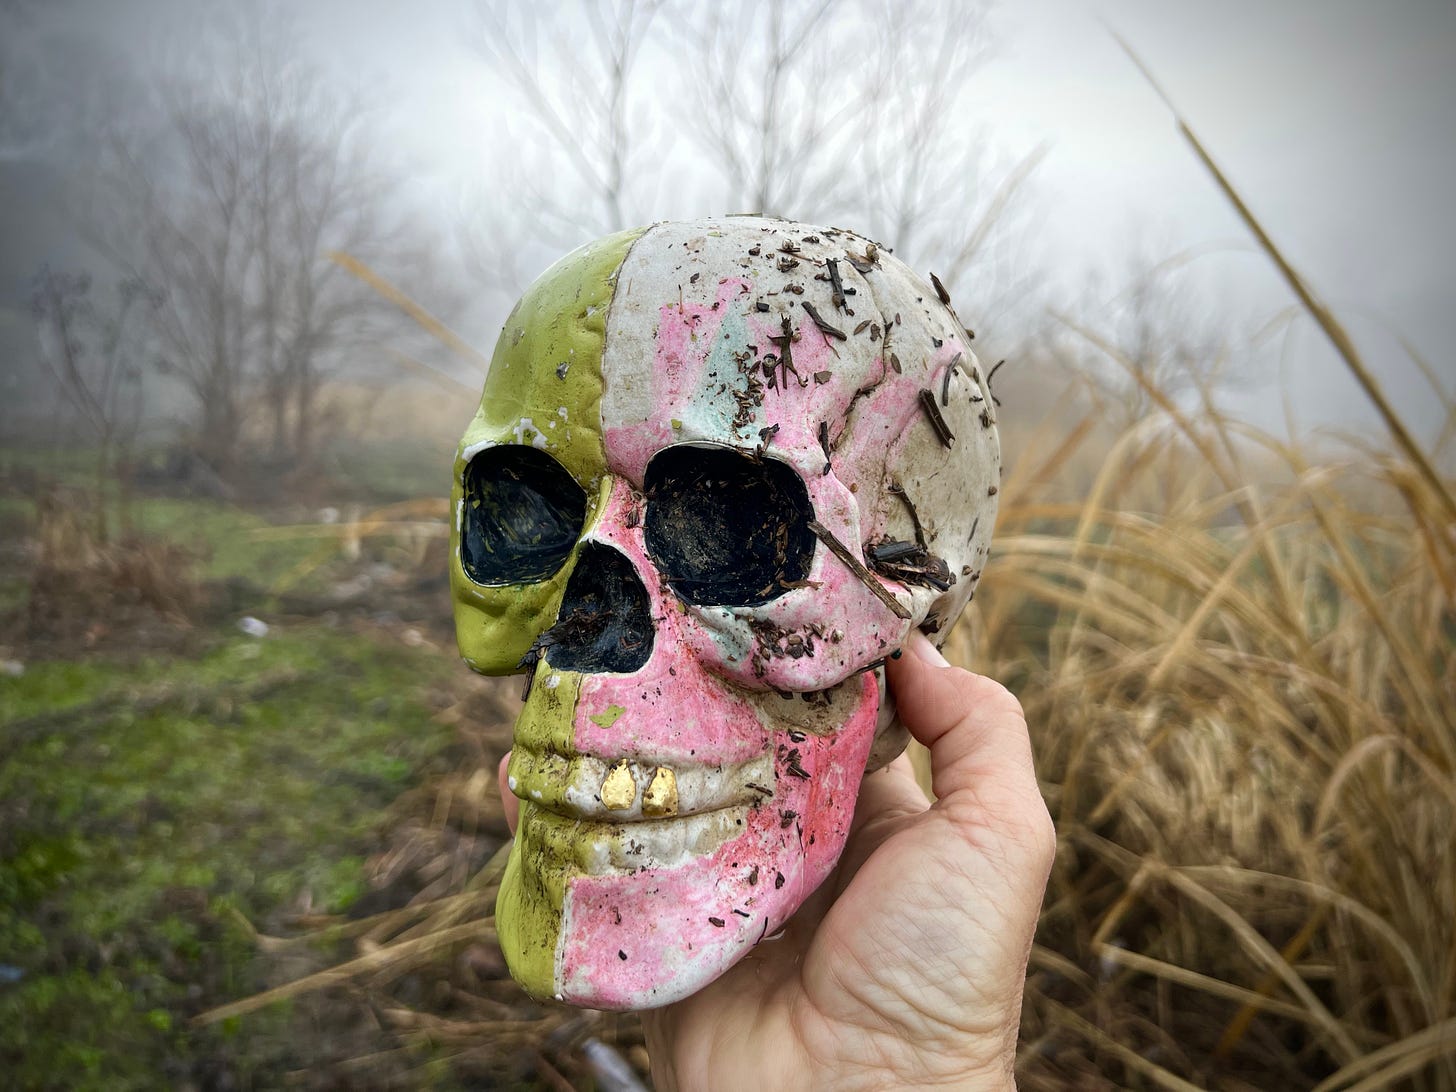 Edgeland sugar skull, held up in the hand of the photographer like poor Yorick